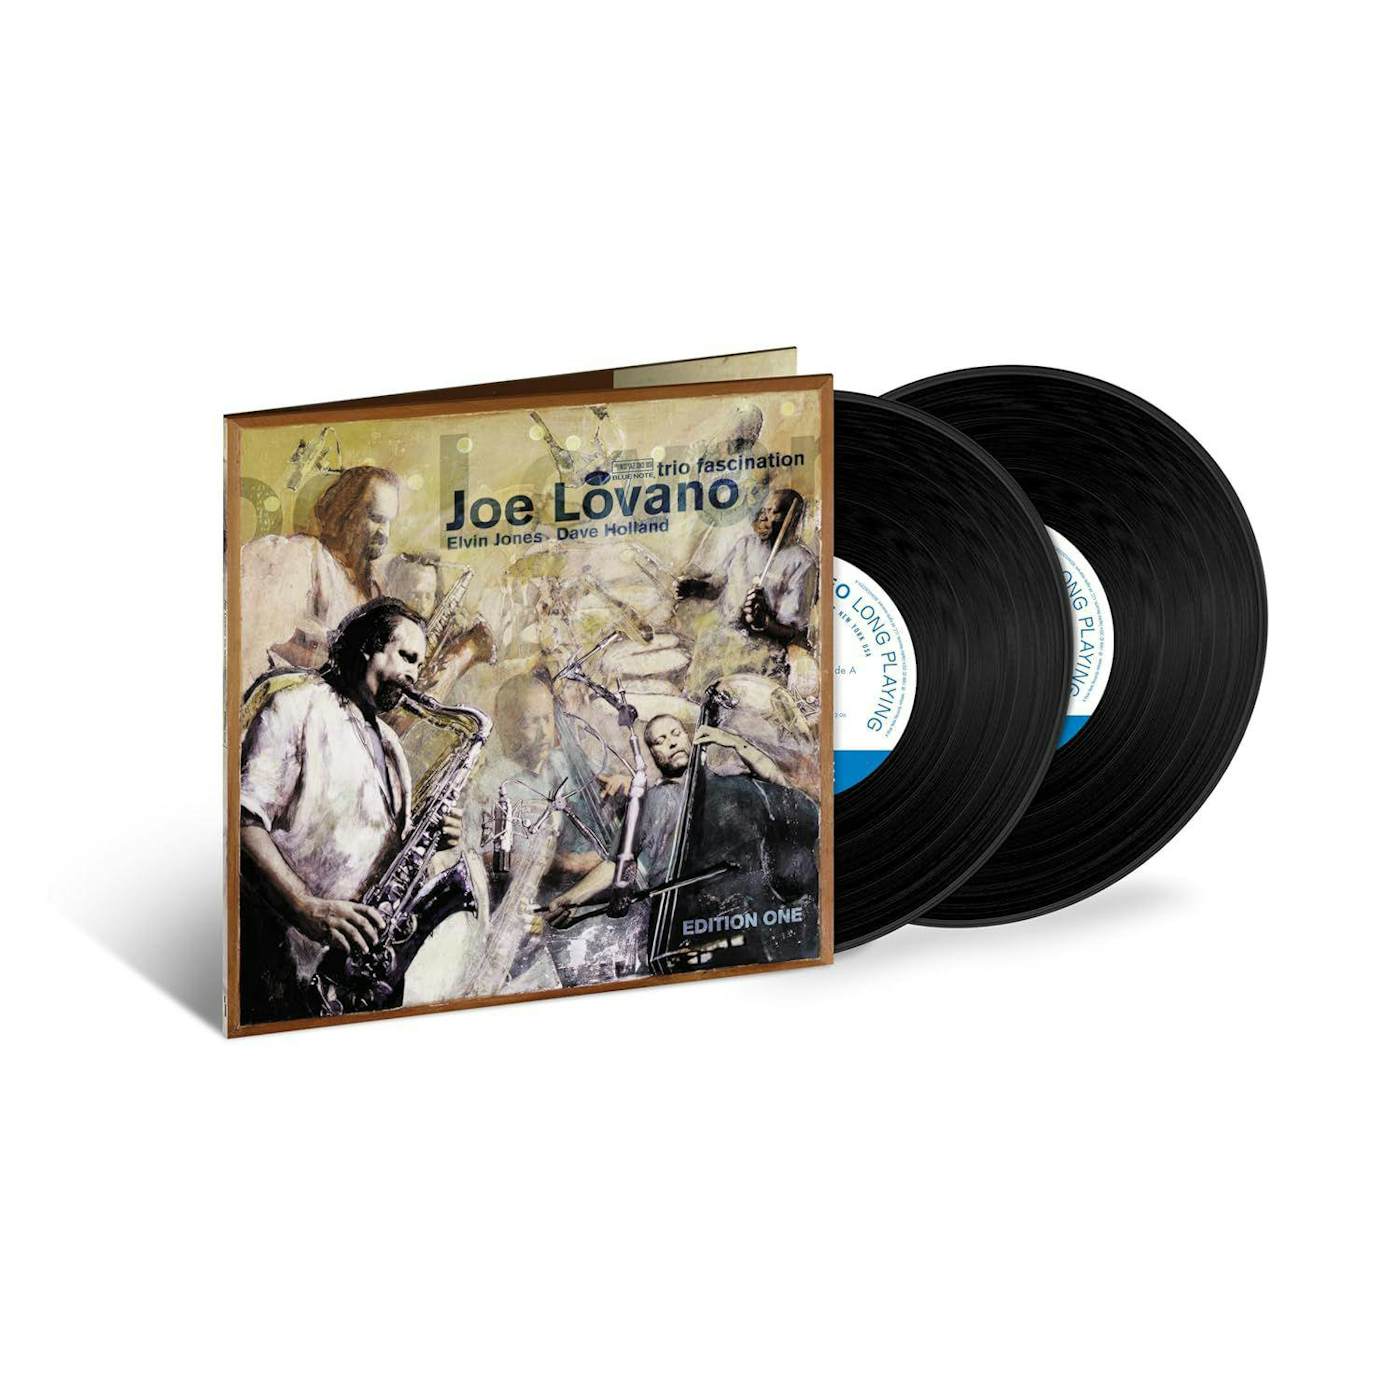 Joe Lovano Trio Fascination (Blue Note Tone Poet Series) (2LP) Vinyl Record